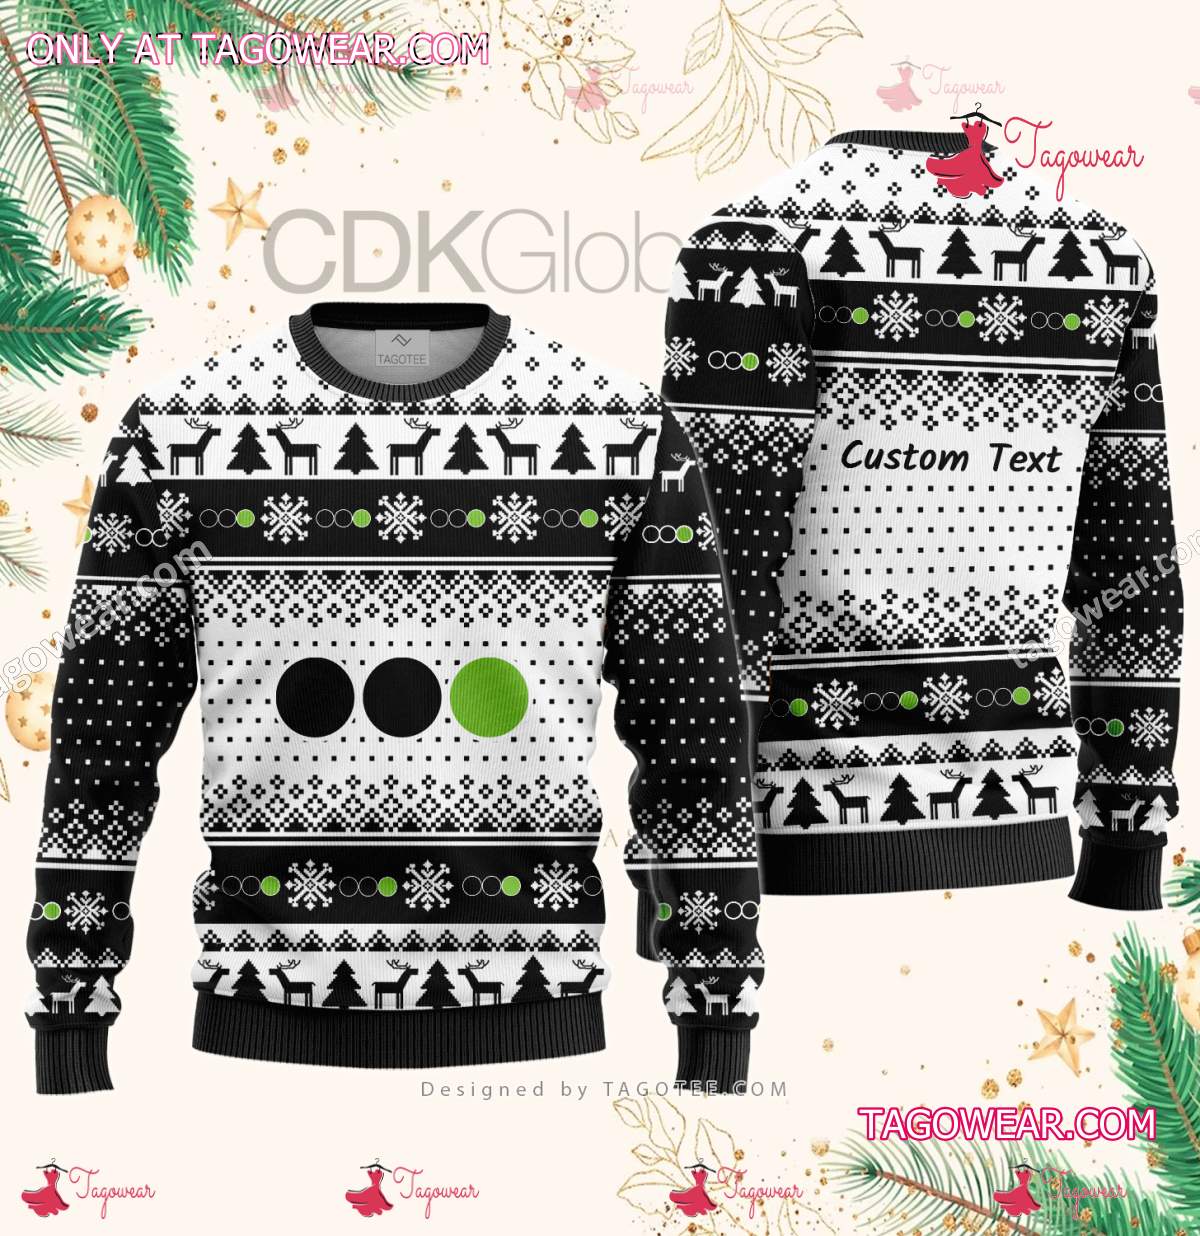 CDK Global, Inc. Ugly Christmas Sweater